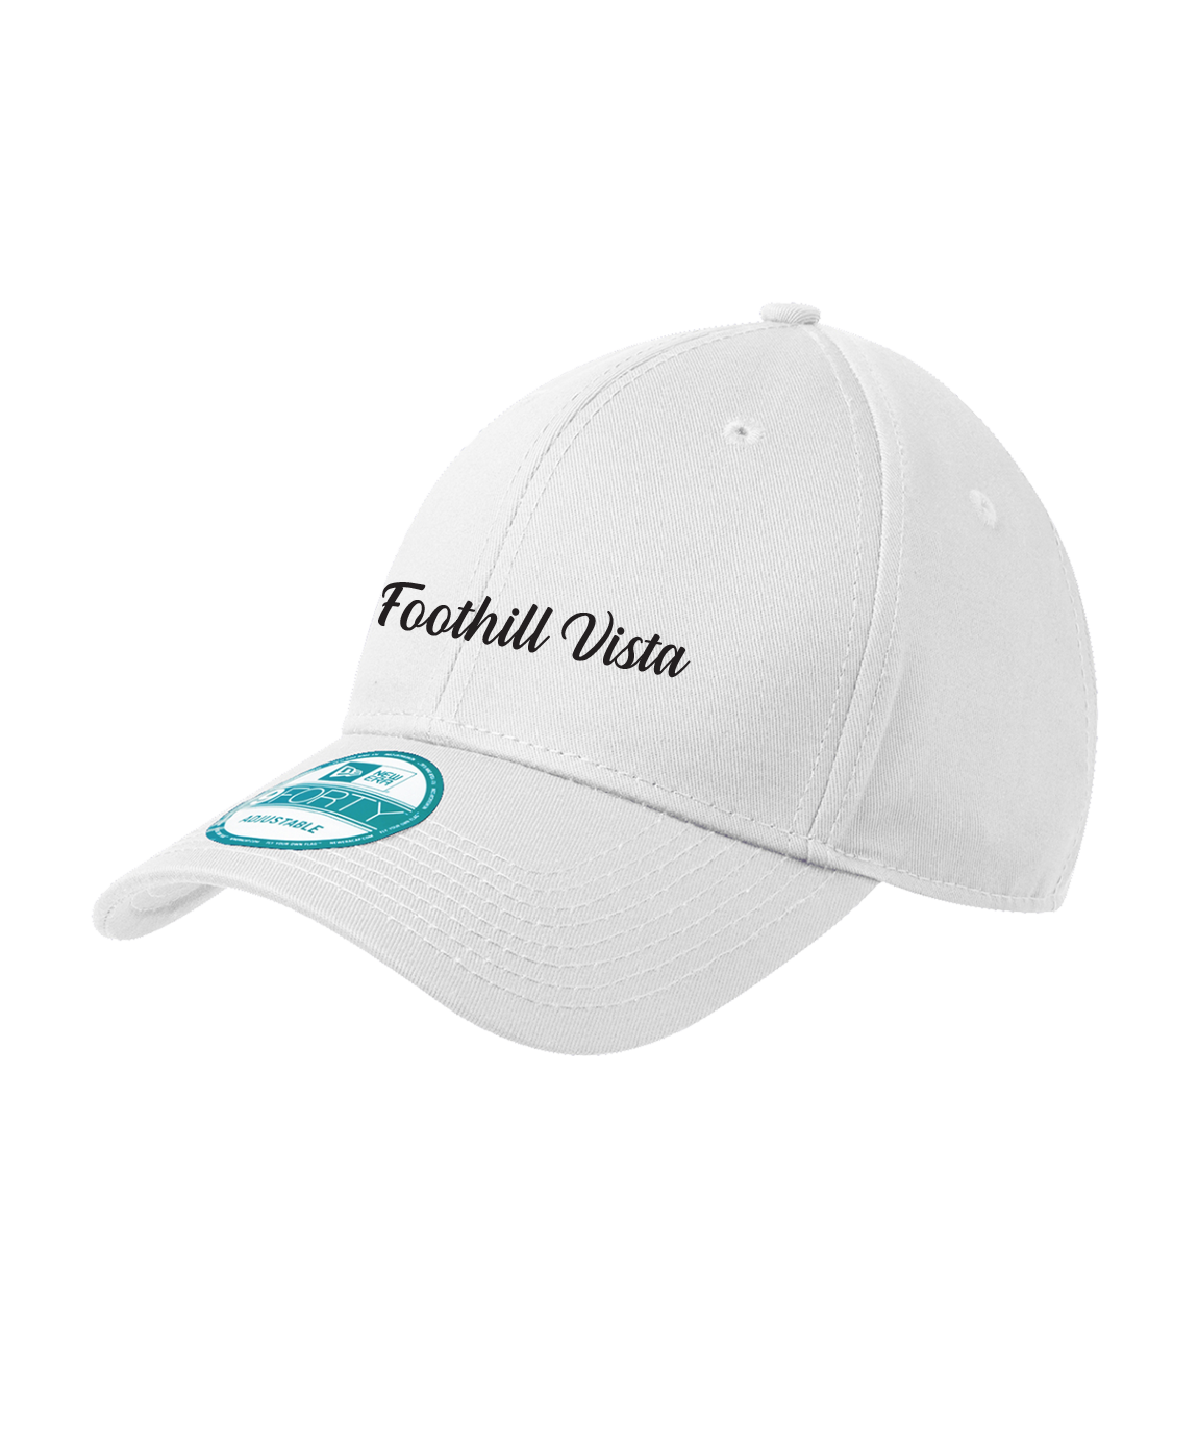 Foothill Vista - New Era® - Adjustable Structured Cap